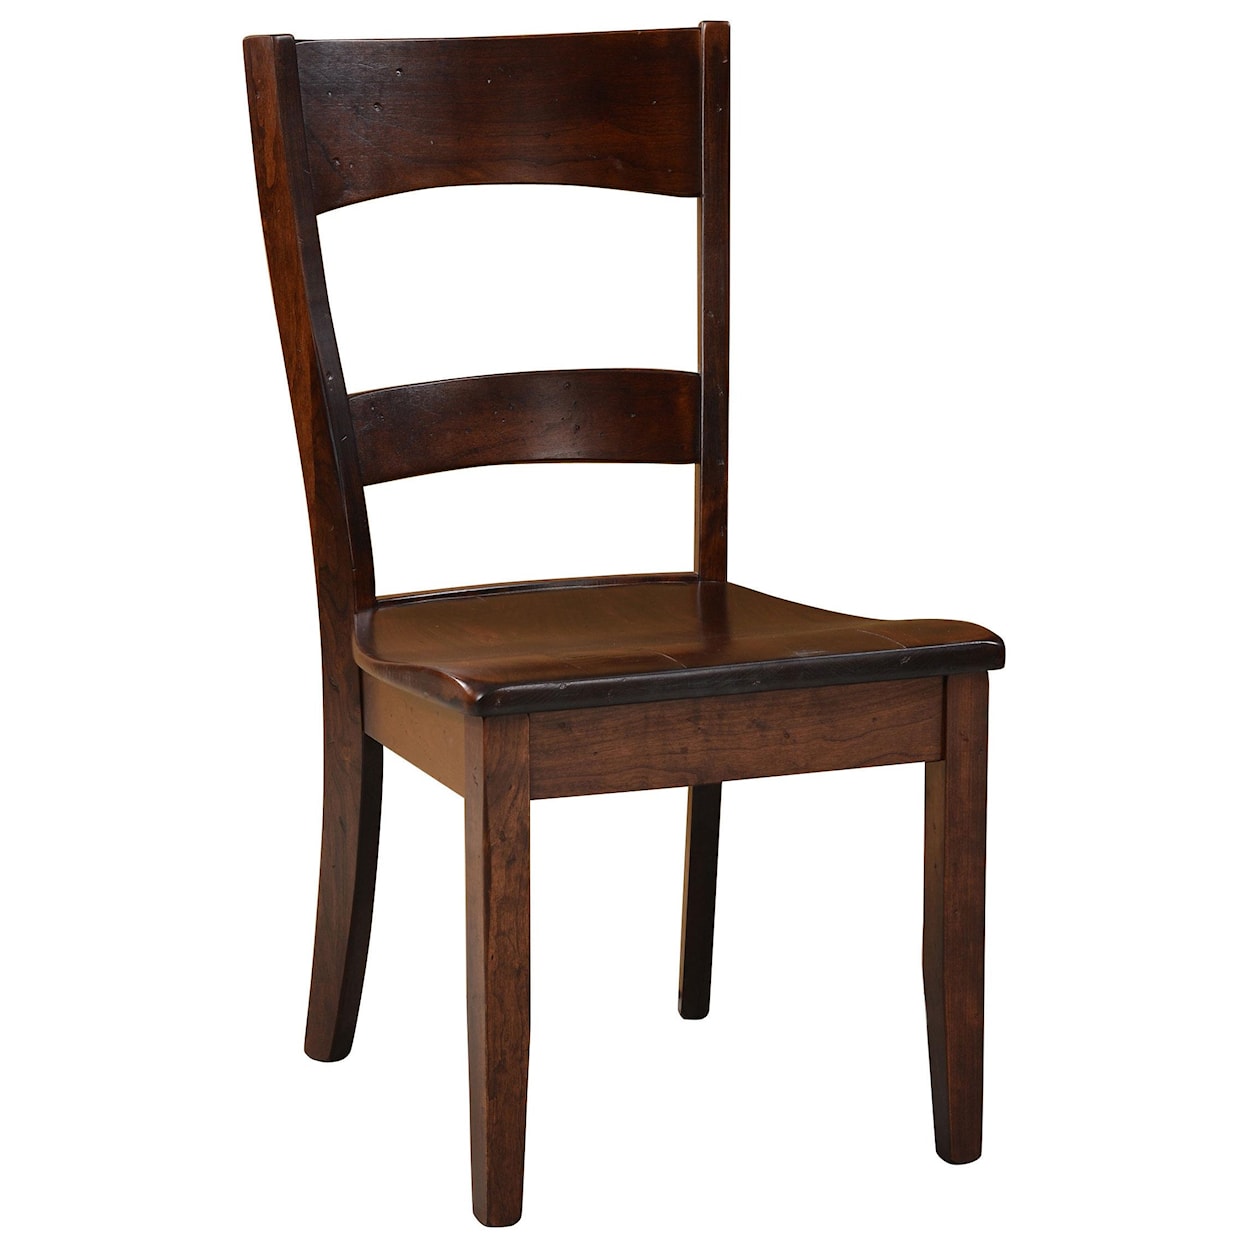 Wengerd Wood Products Coalton Side Chair